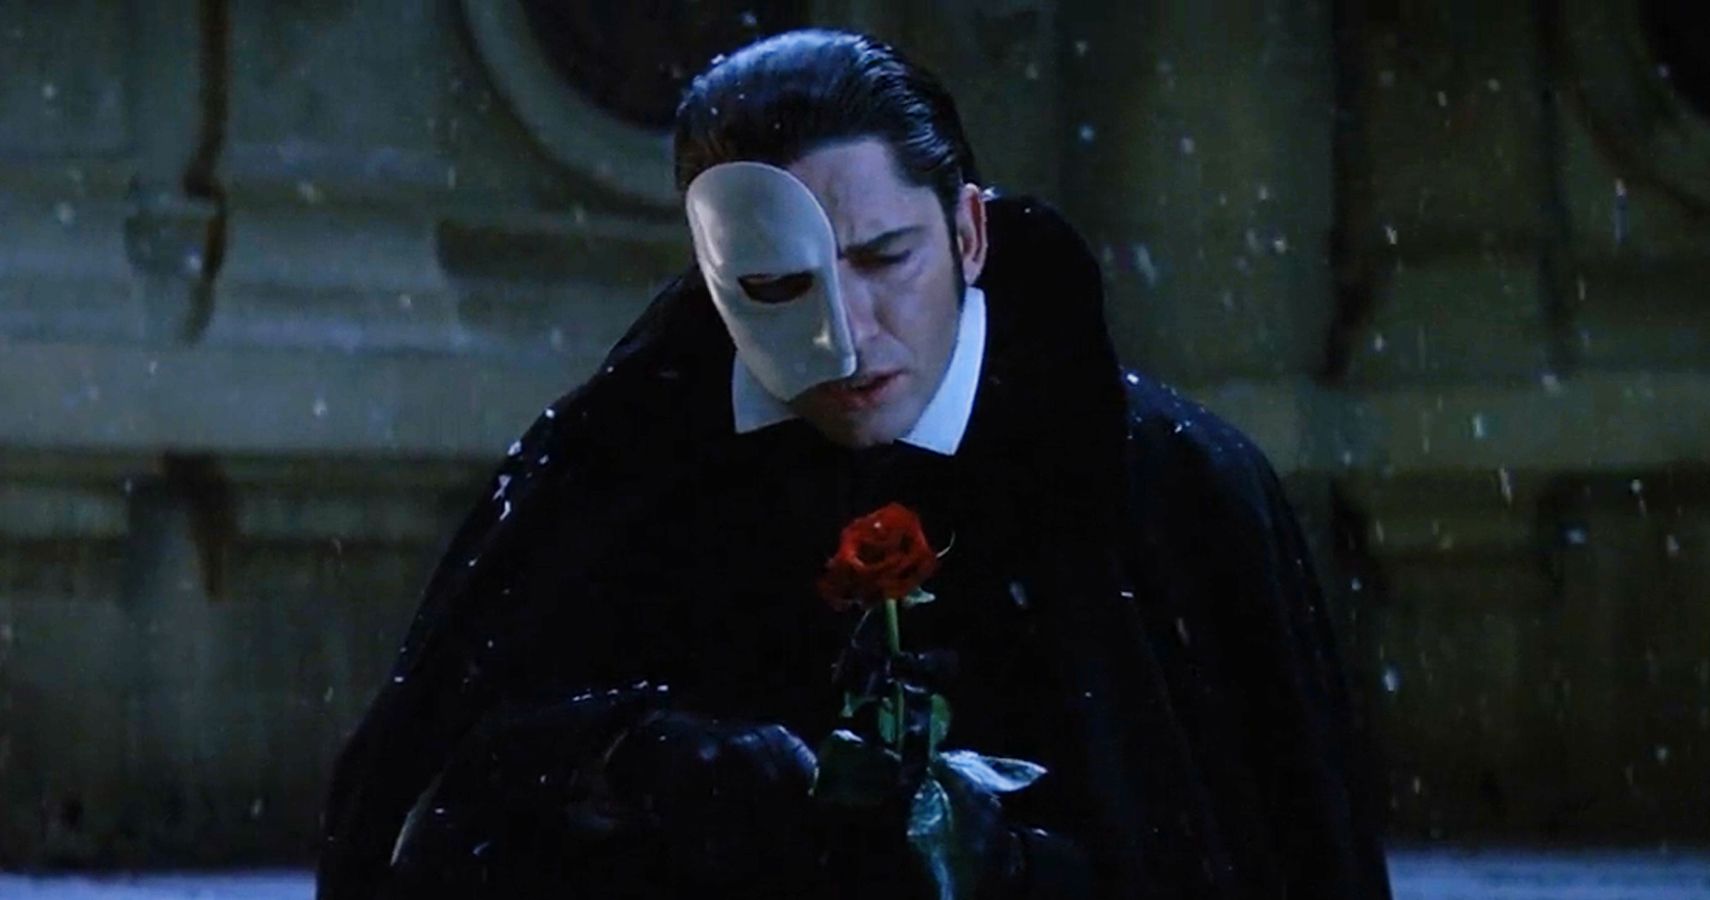 the phantom of the opera characters